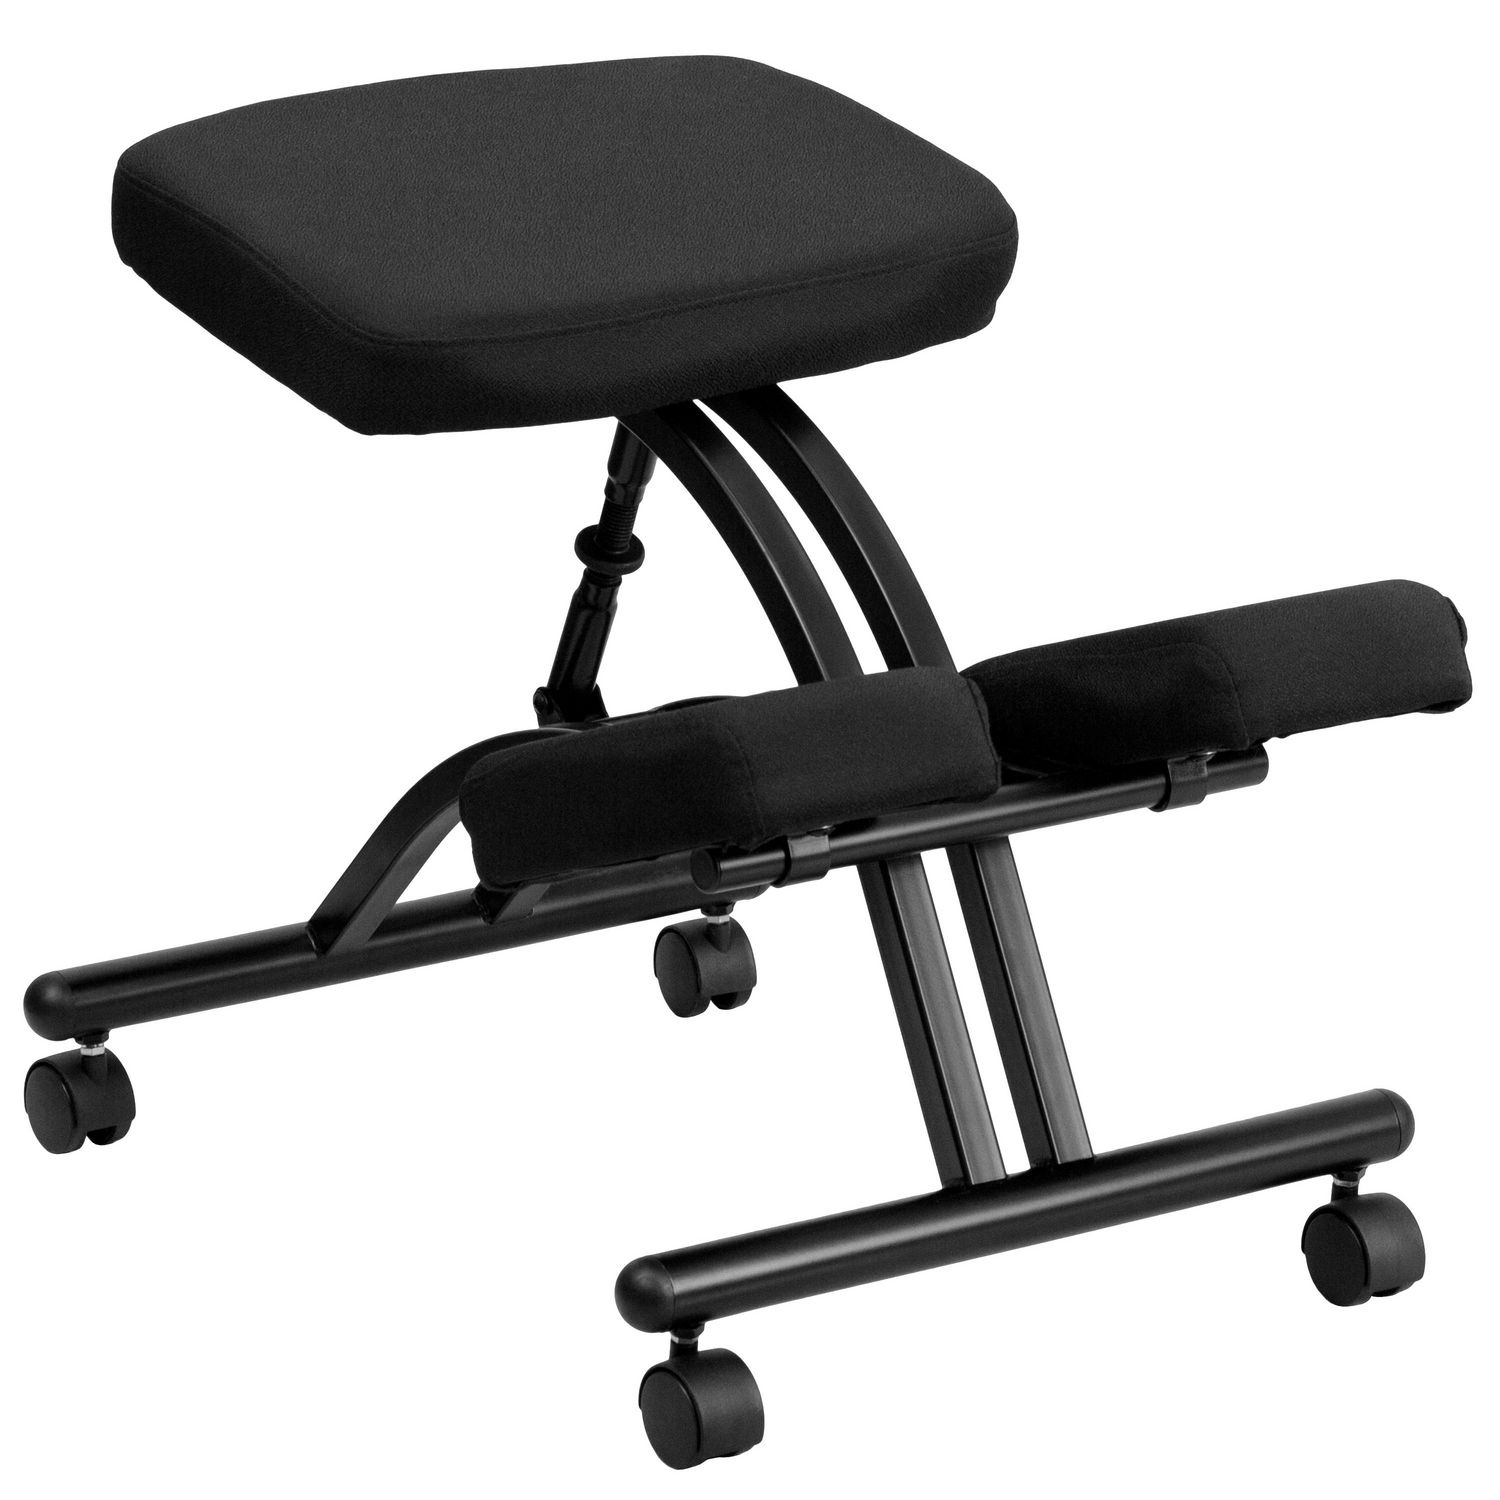 Mobile Ergonomic Kneeling Office Chair in Black Fabric | Walmart Canada